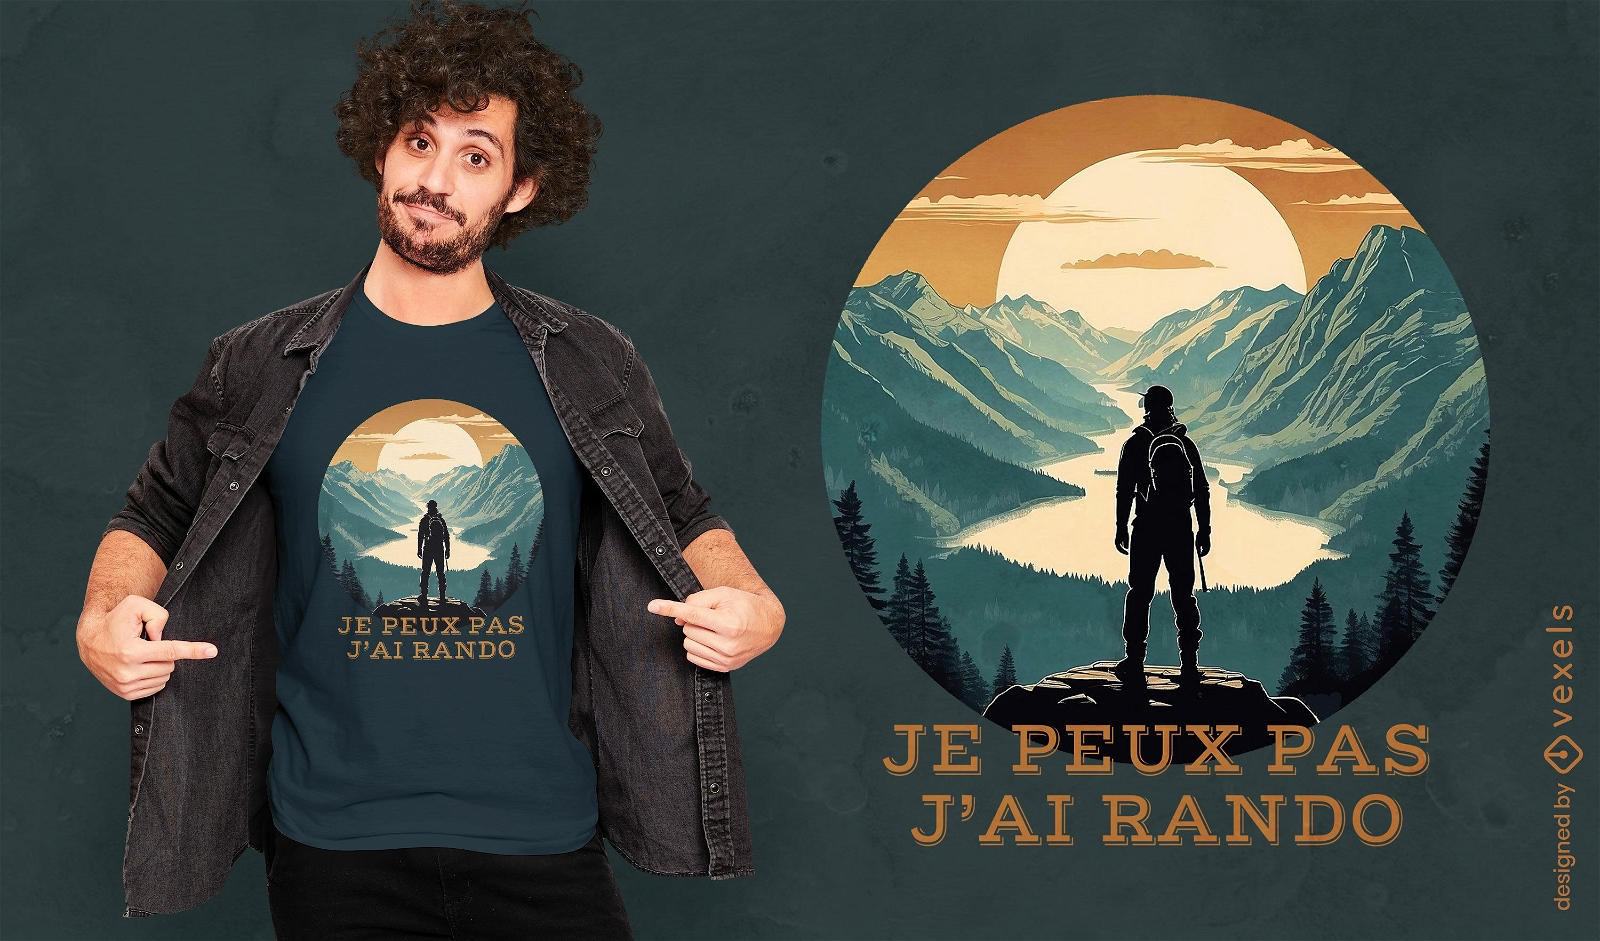 Inspiring mountain hiking quote t-shirt design